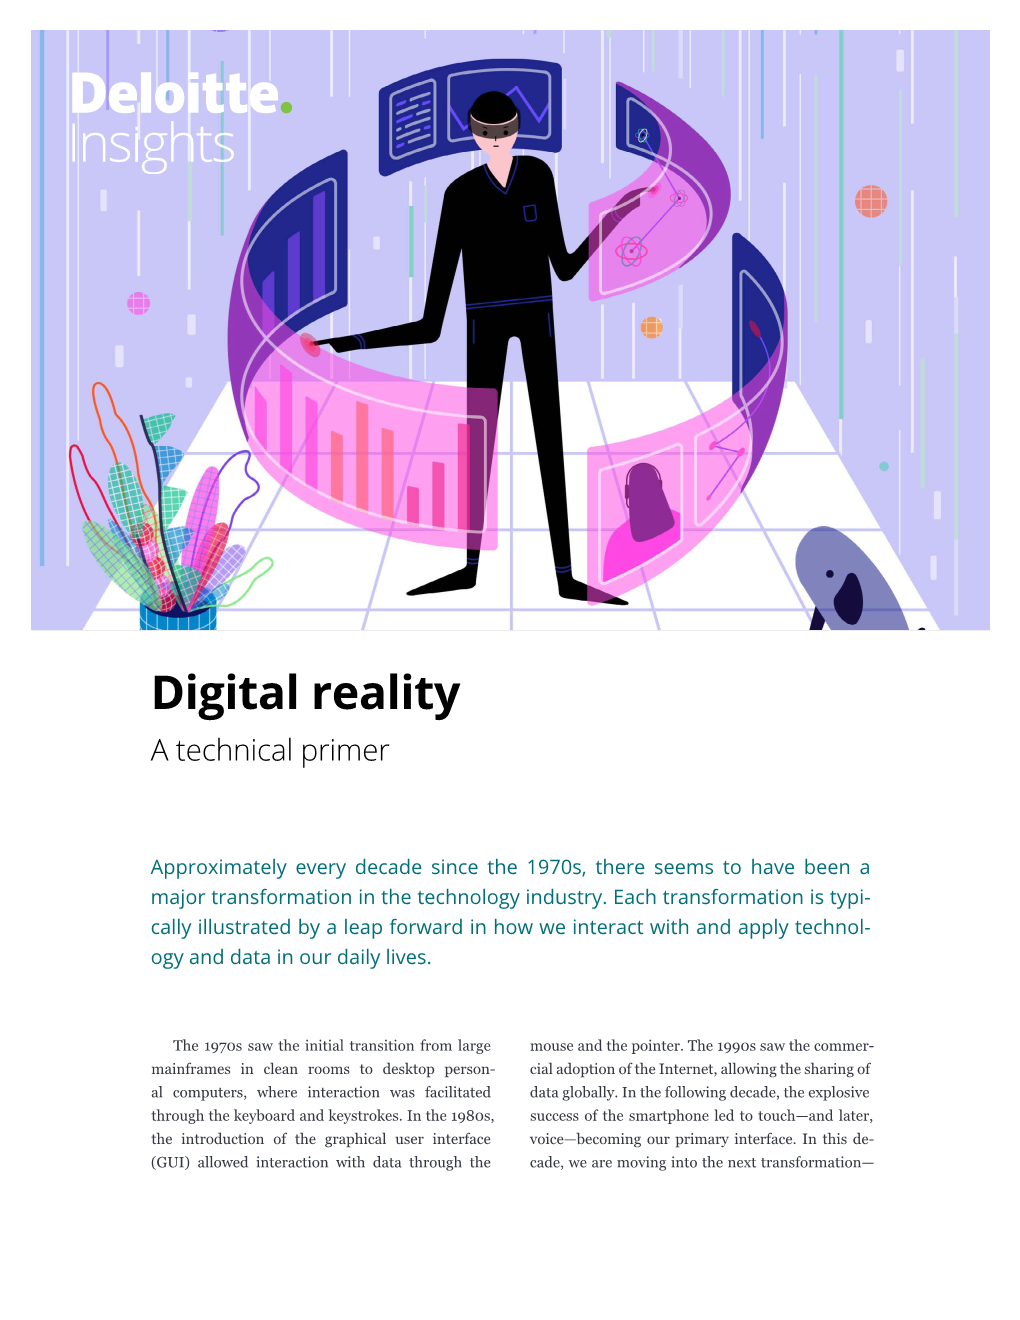 Digital Reality a Technical Primer